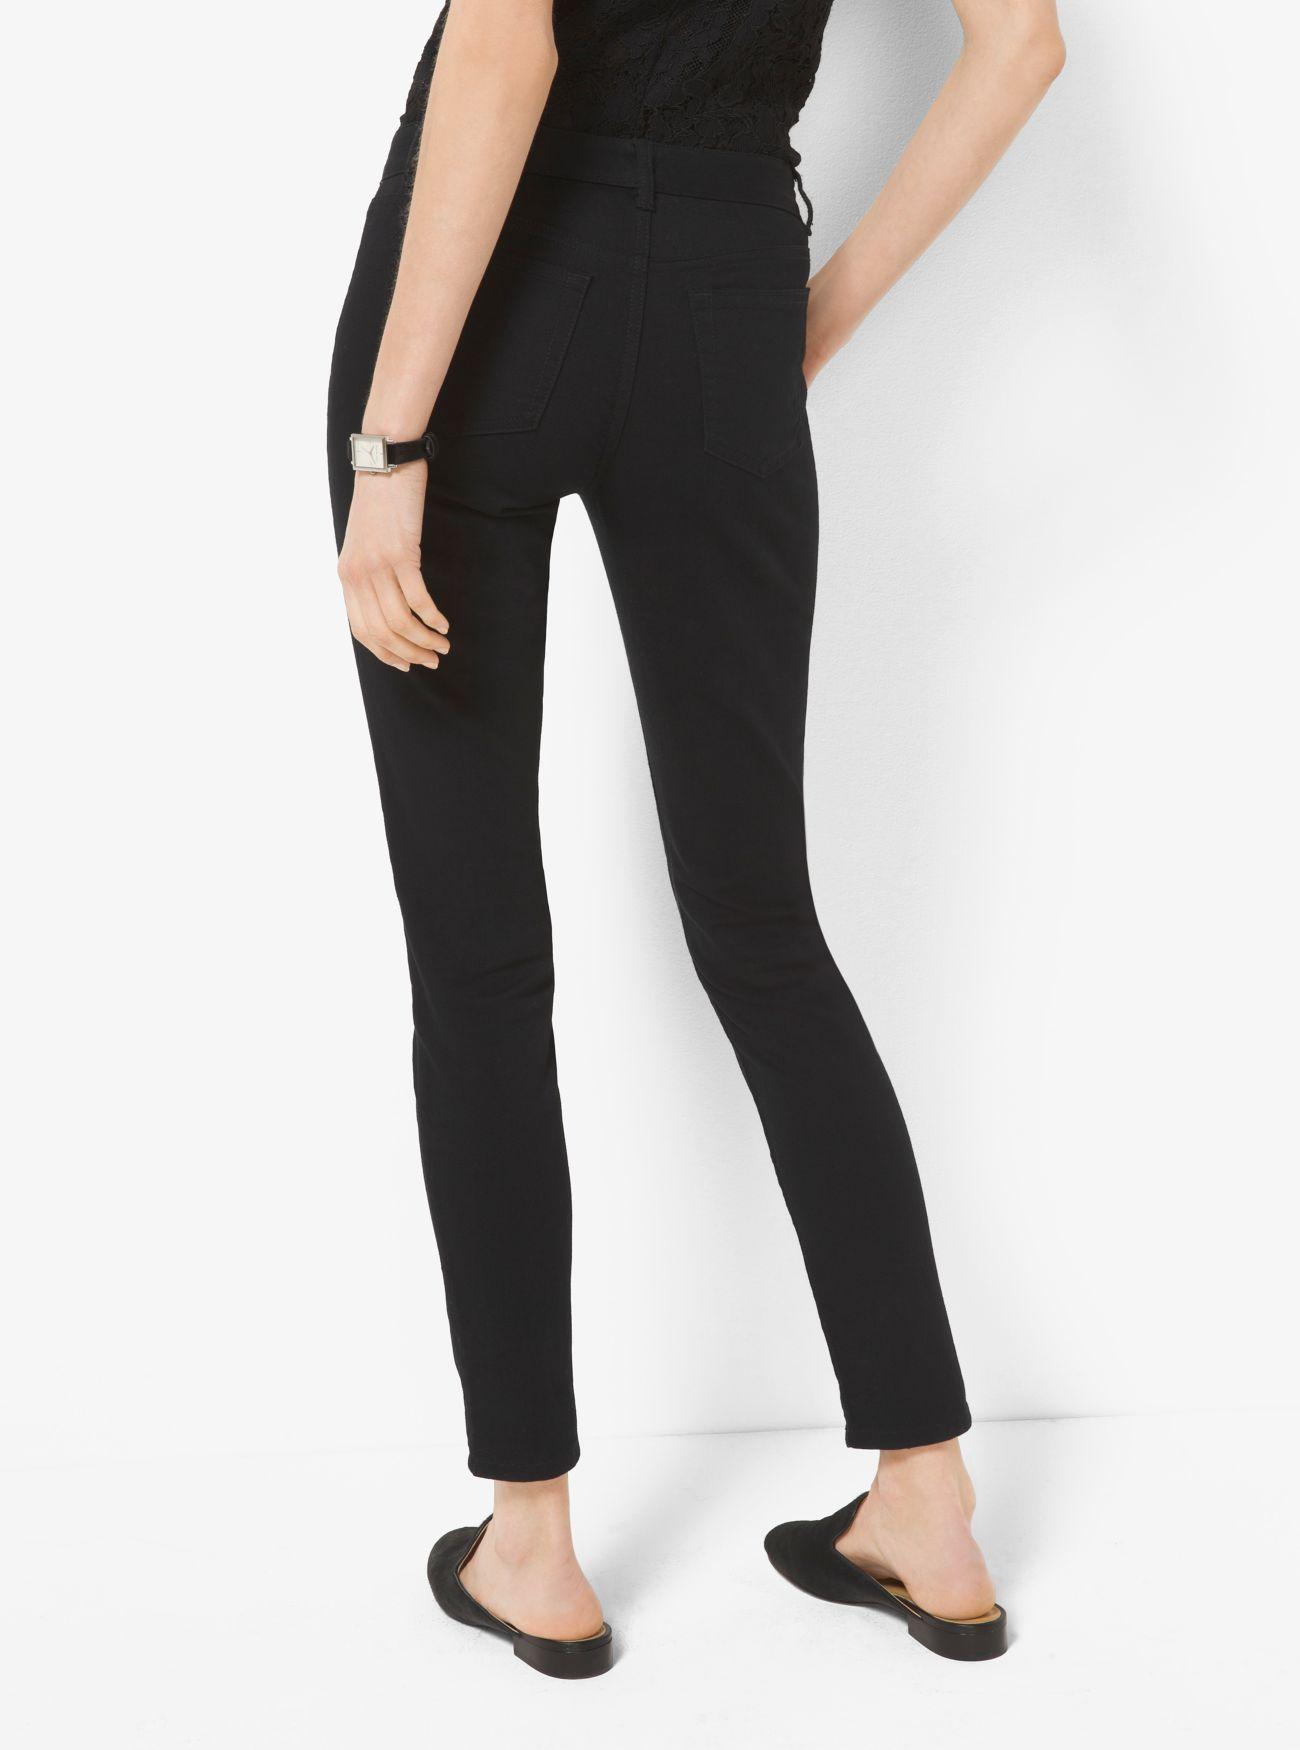 Michael Kors Selma Skinny Jeans in Black | Lyst